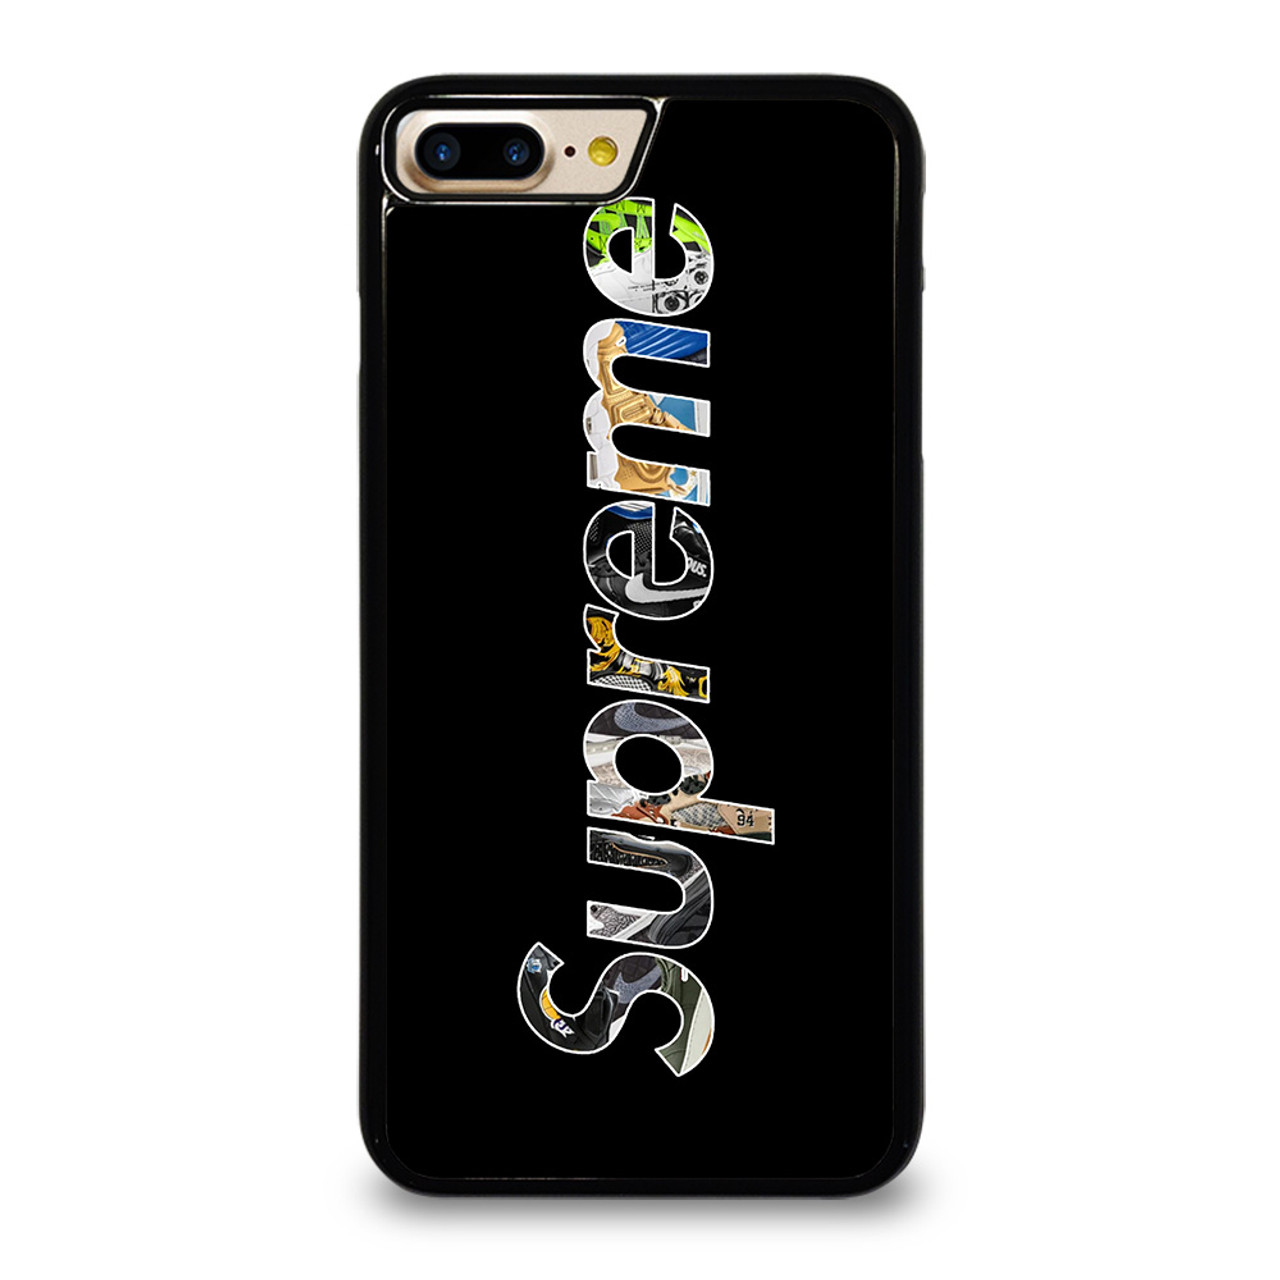 SUPREME NIKE SNEAKERS BLACK iPhone 7 / 8 Plus Case Cover